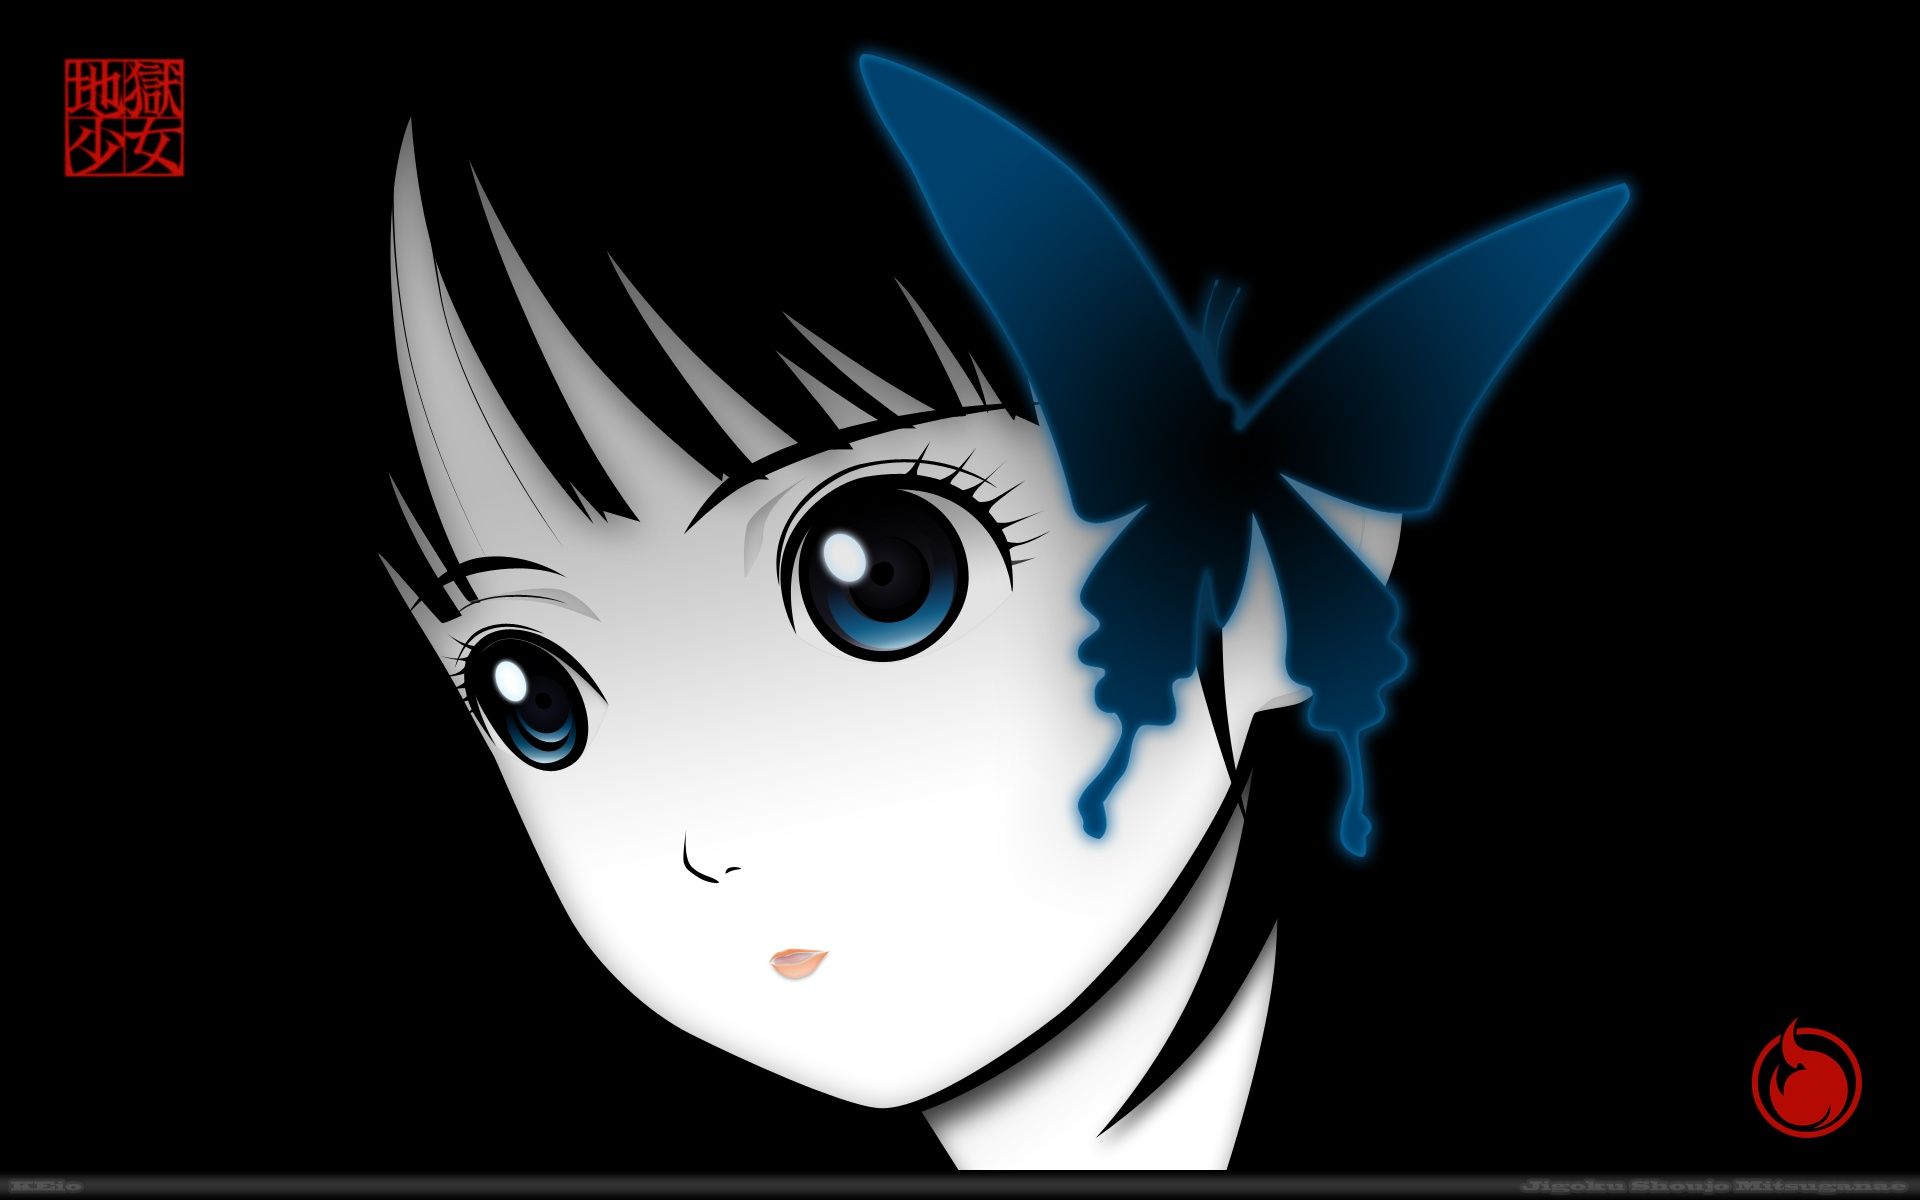 Anime Girl 97 Wallpaper in jpg format for free download